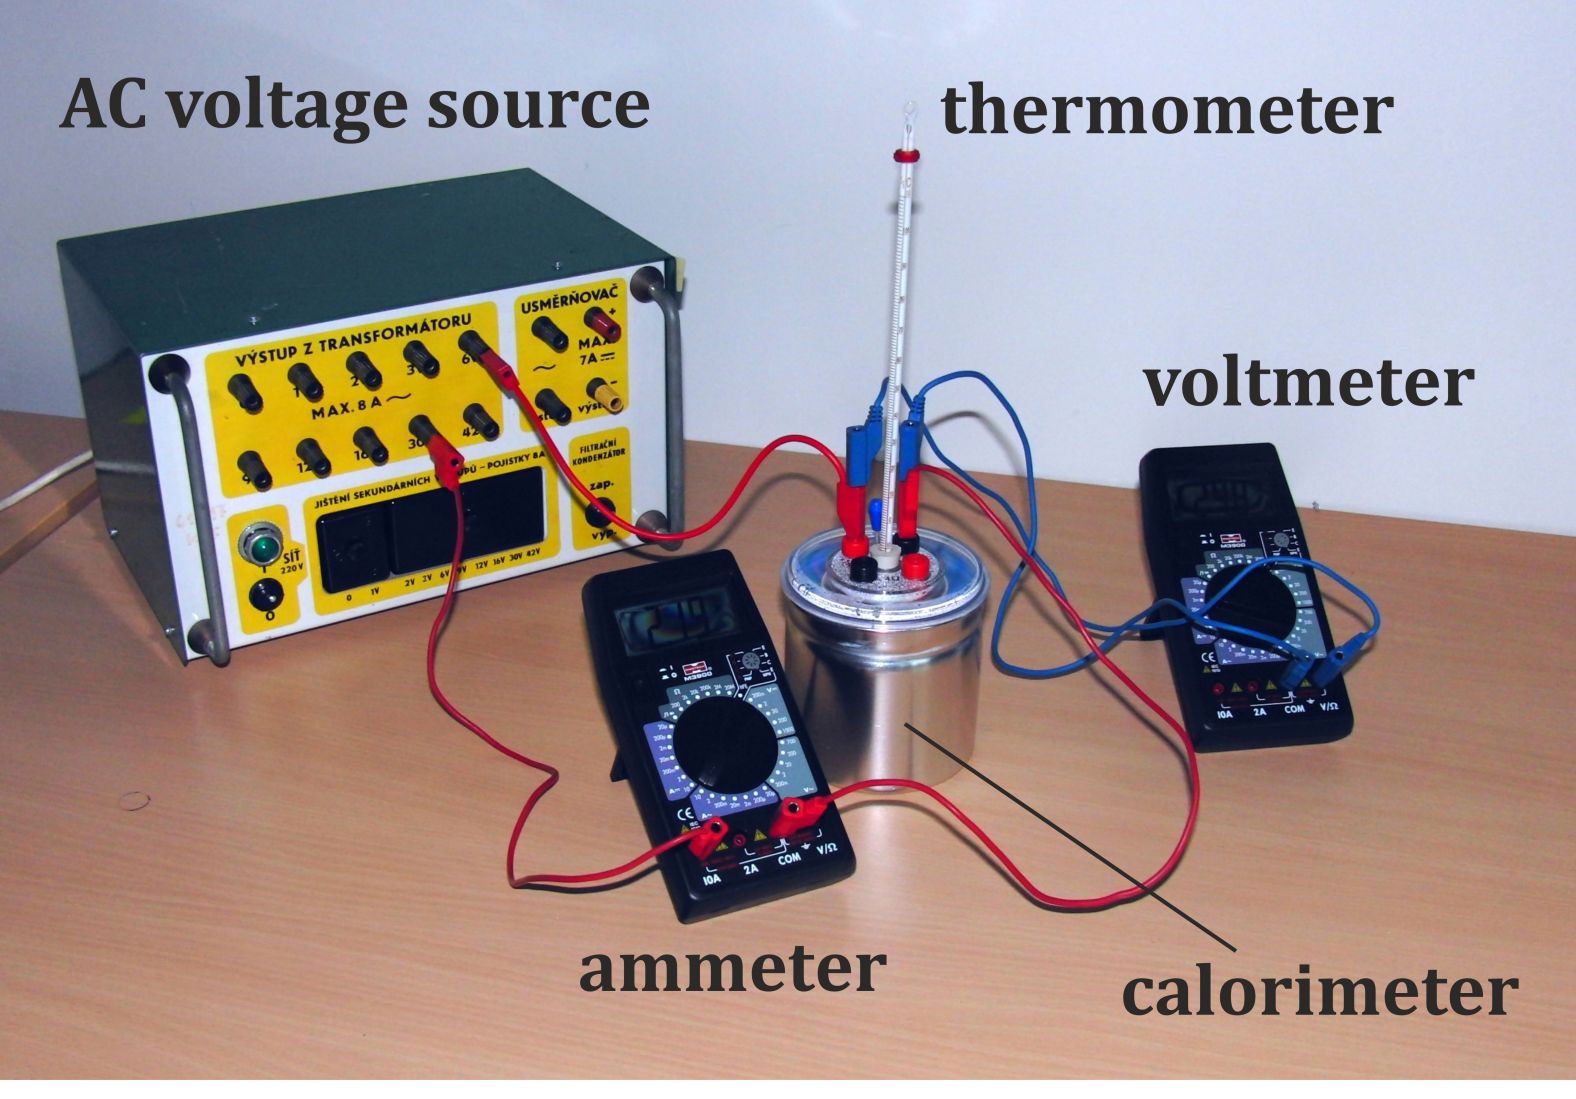 joule heating of a resistor lab report